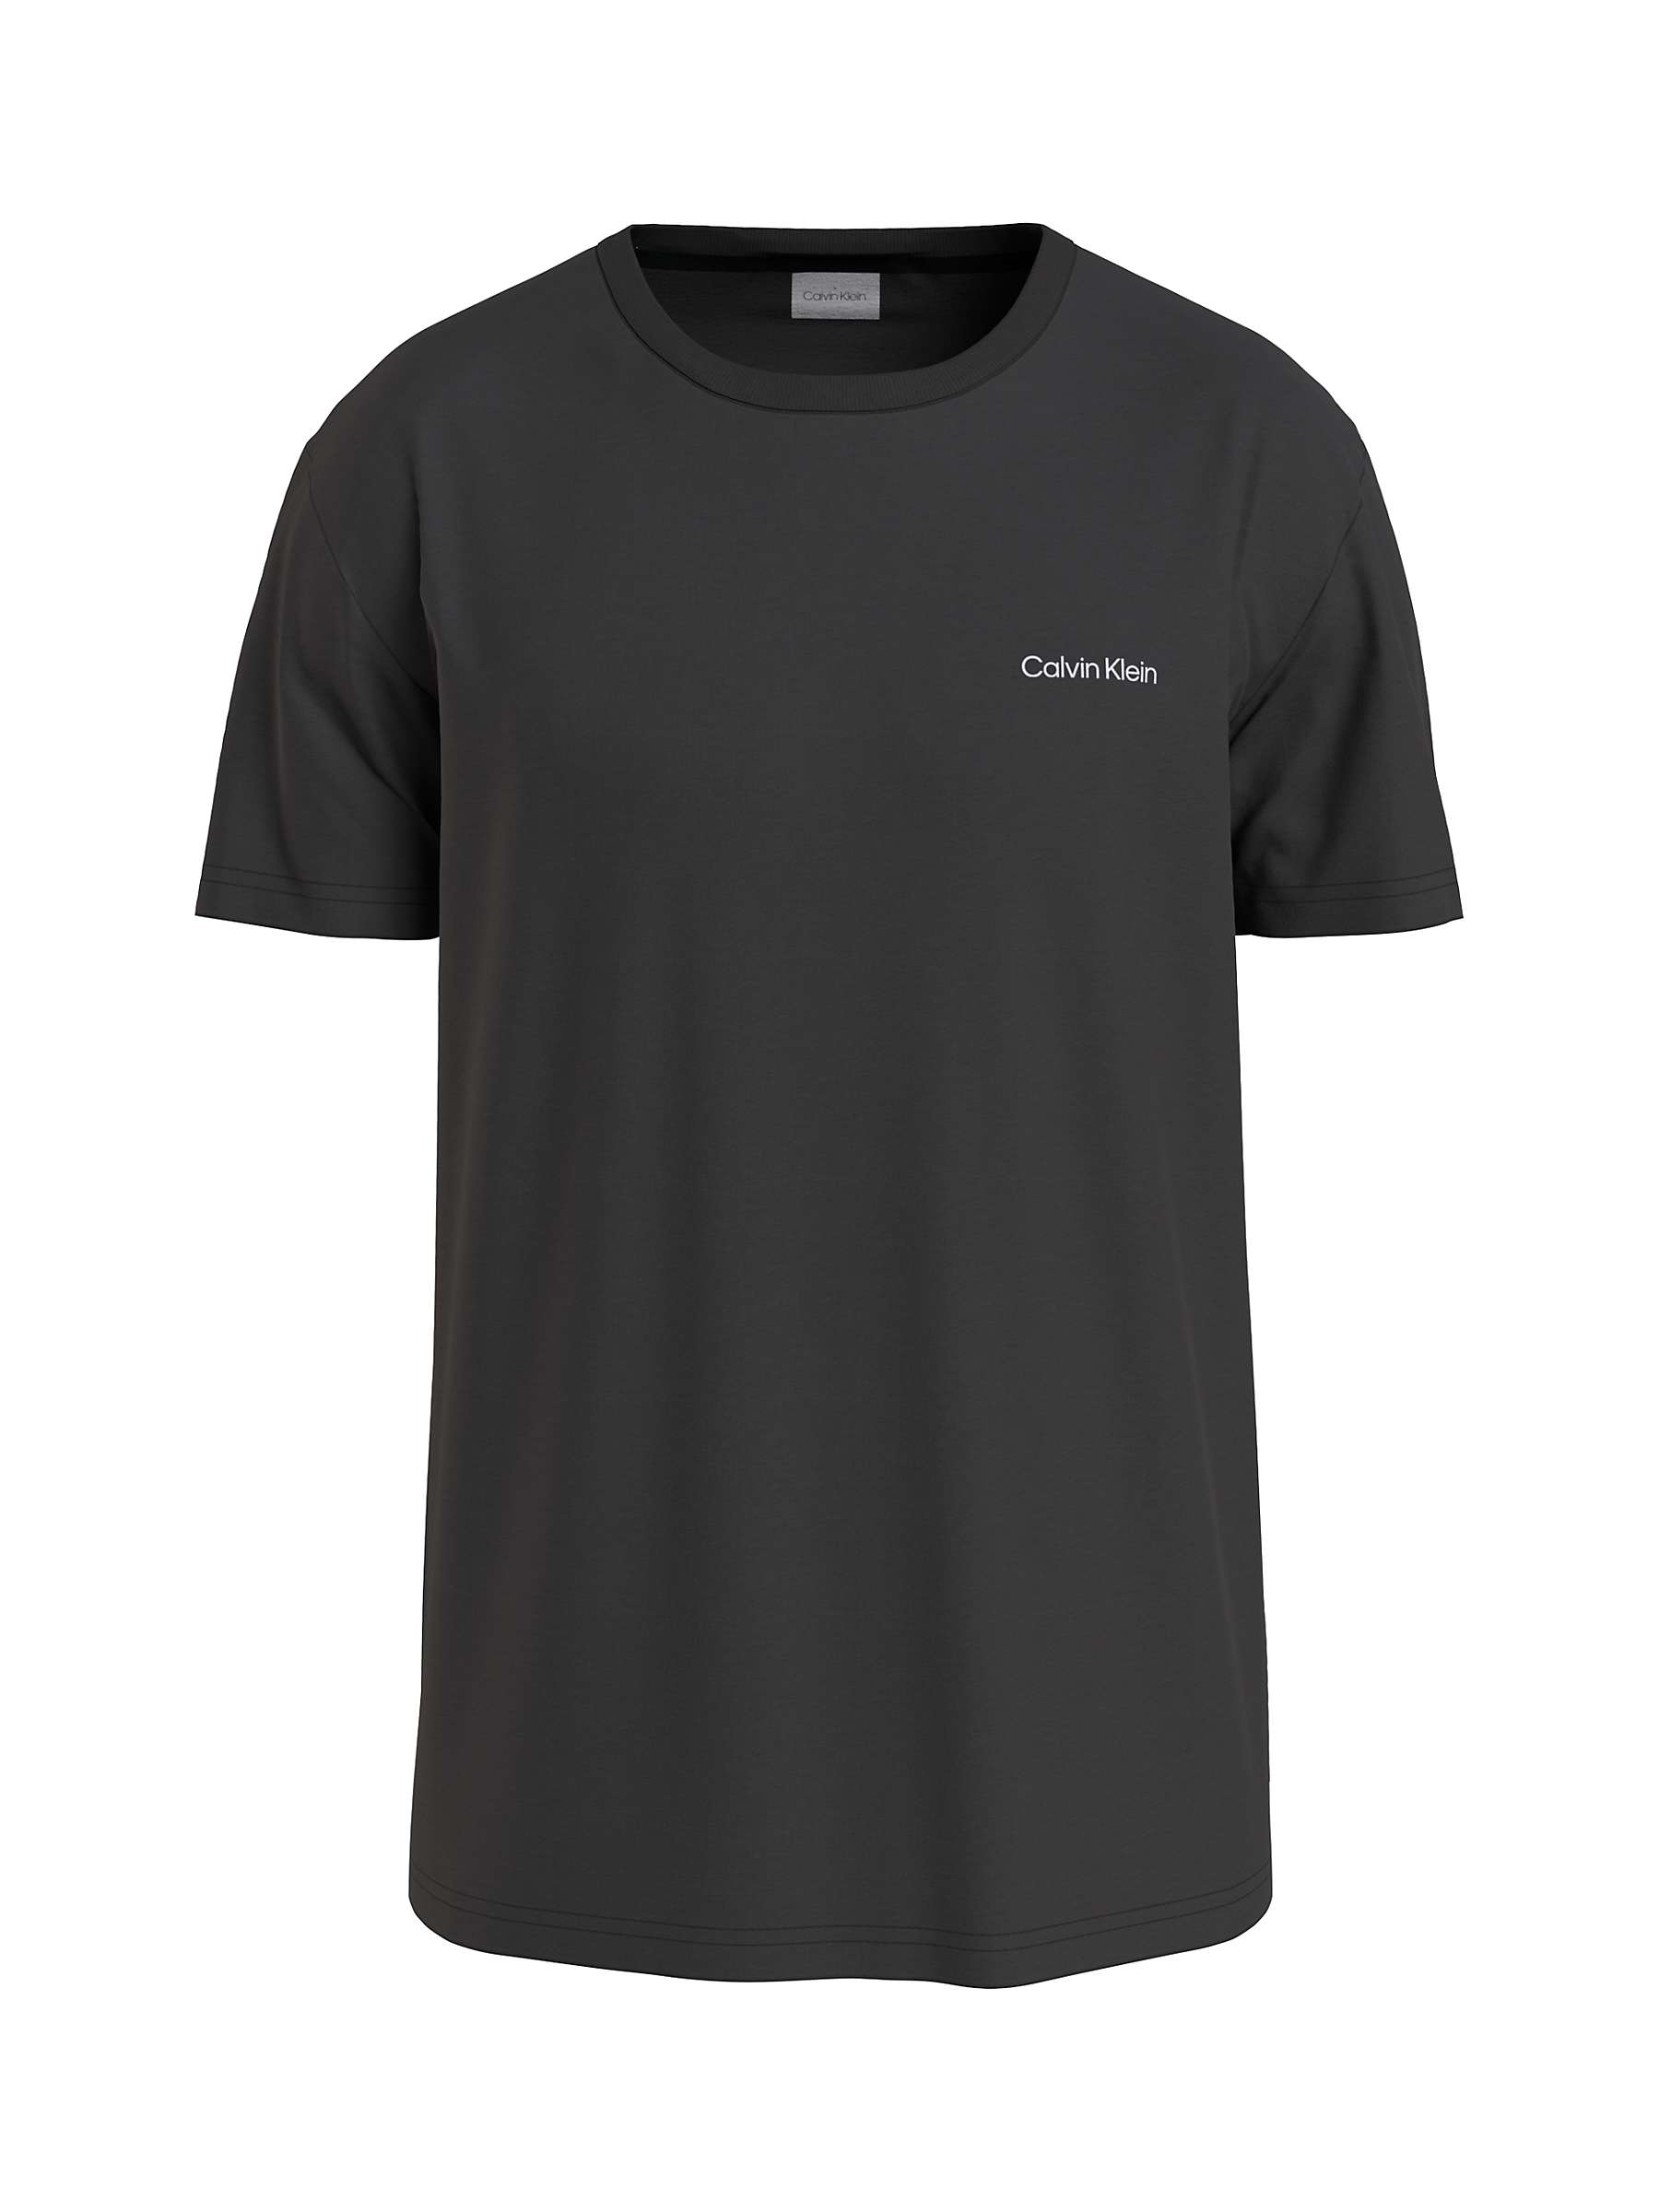 Buy Calvin Klein Signature Logo T-Shirt Online at johnlewis.com